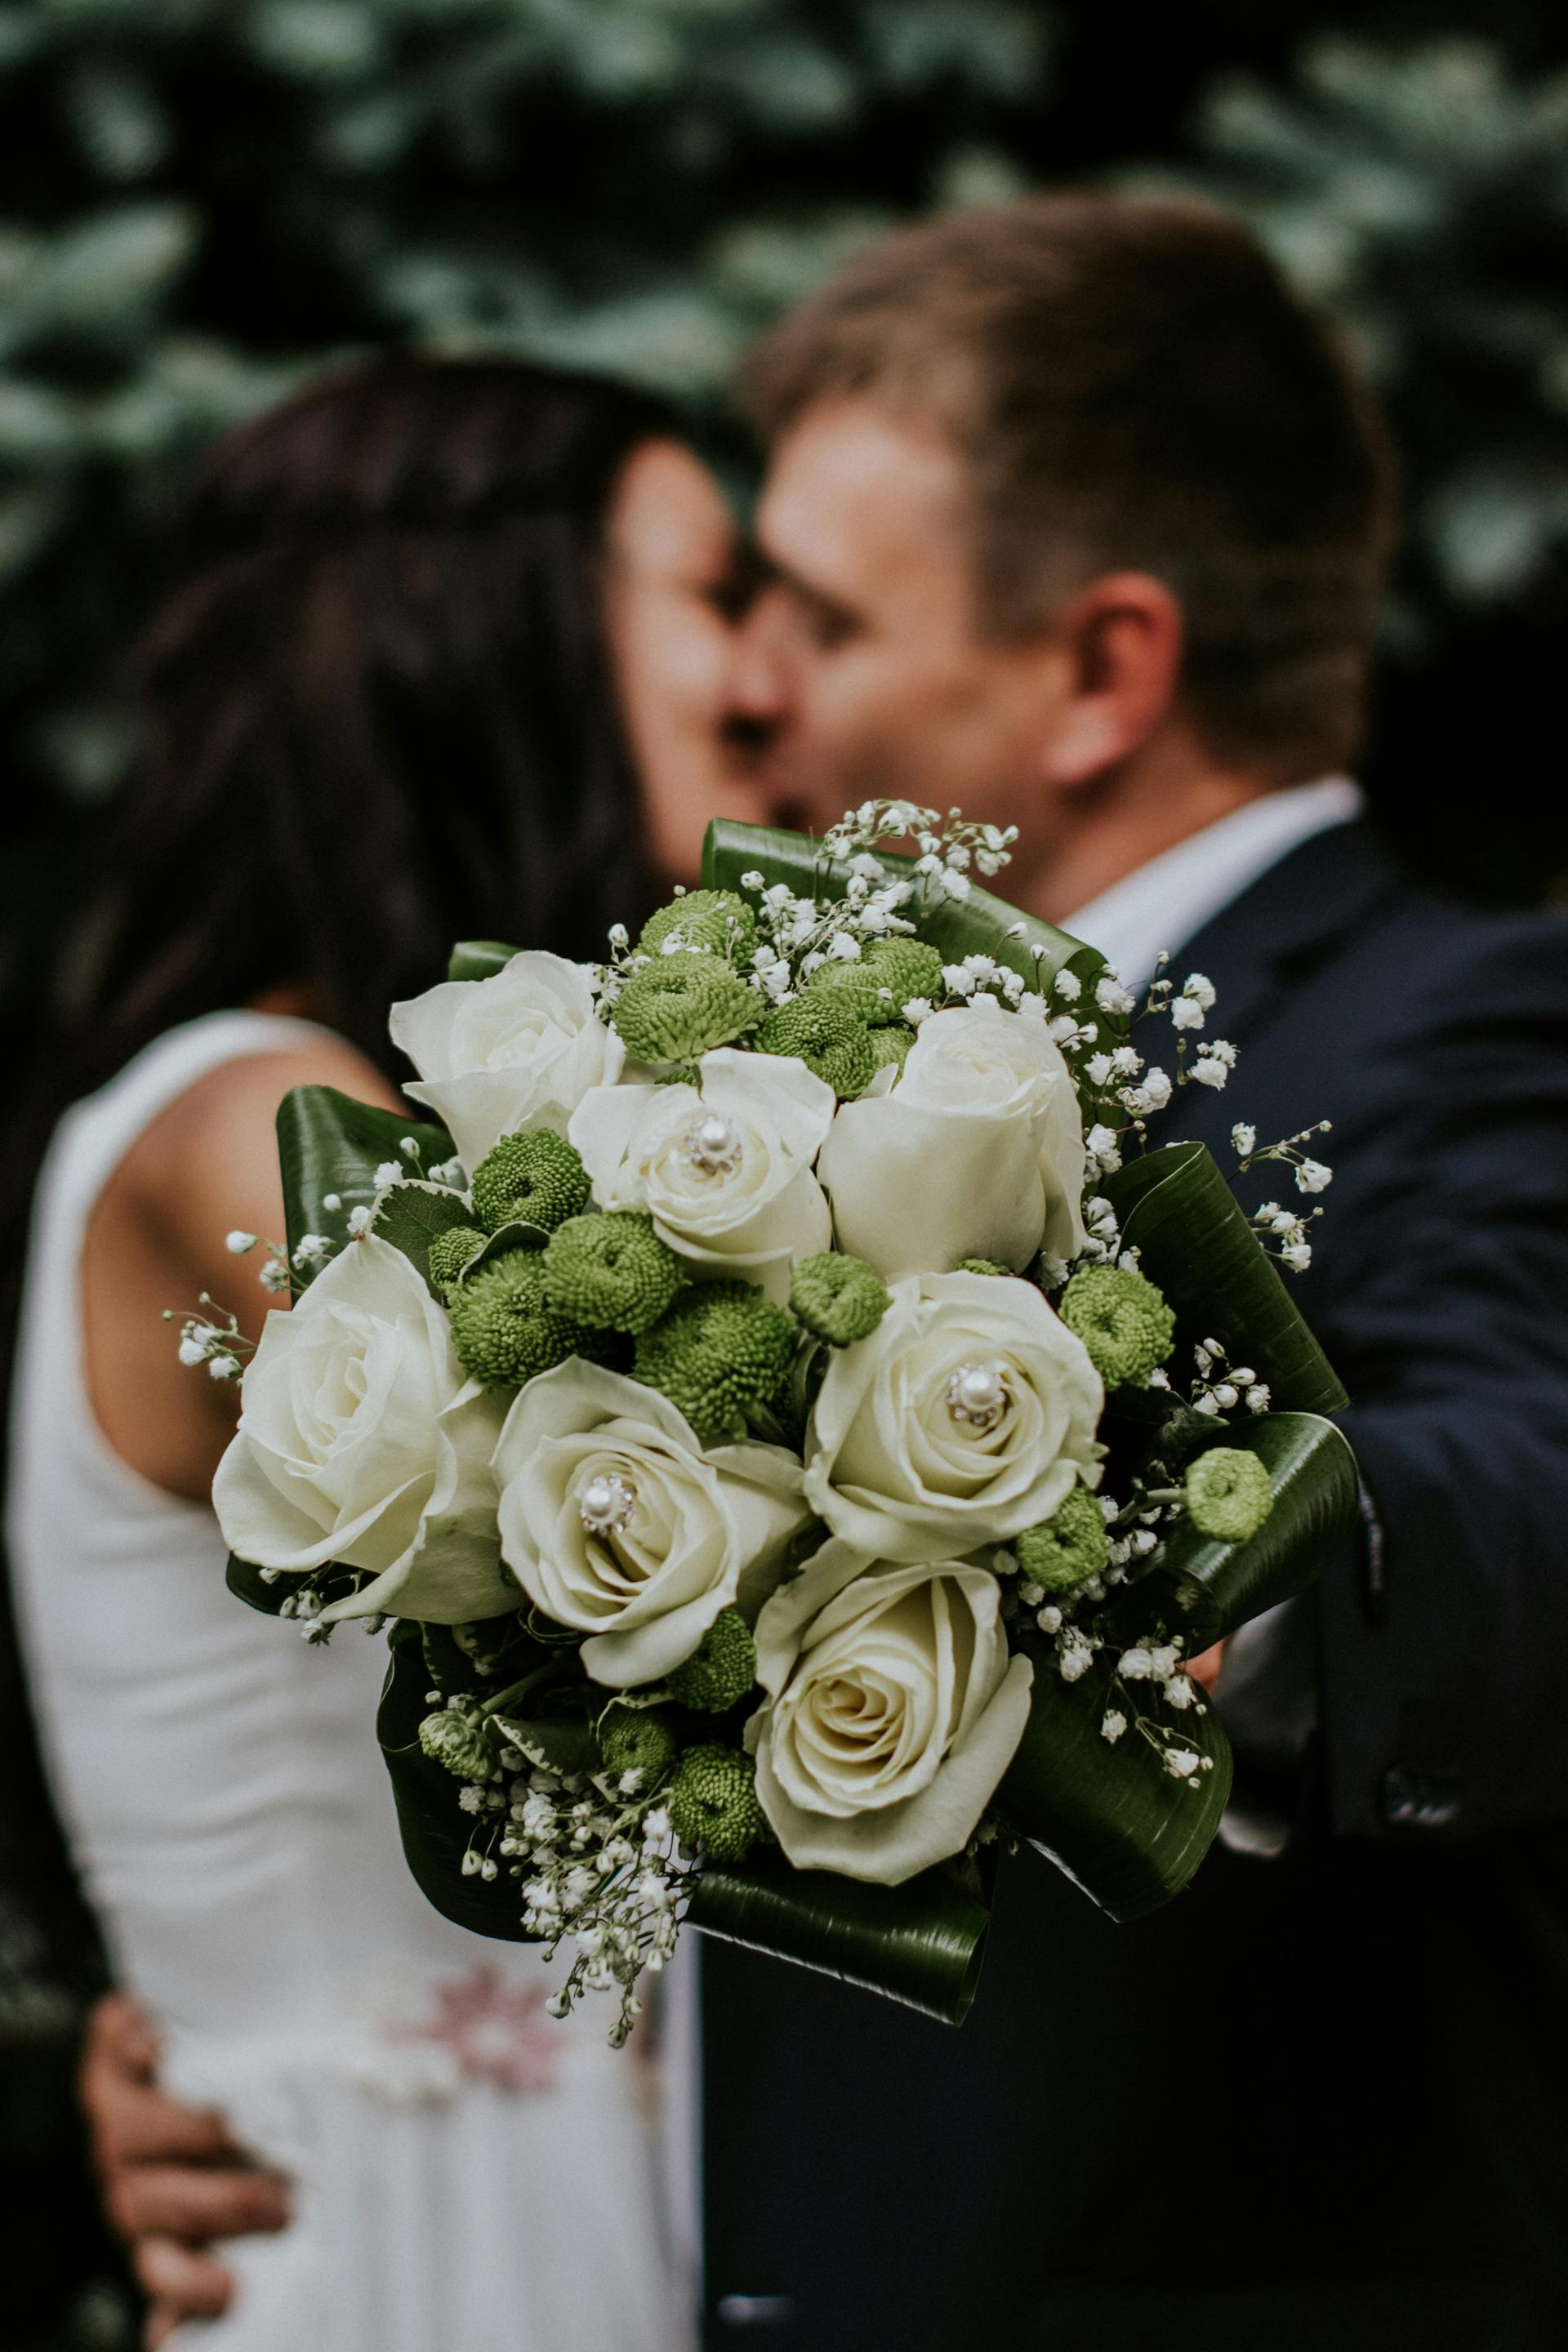 Un matrimonio besándose | Foto: Pexels